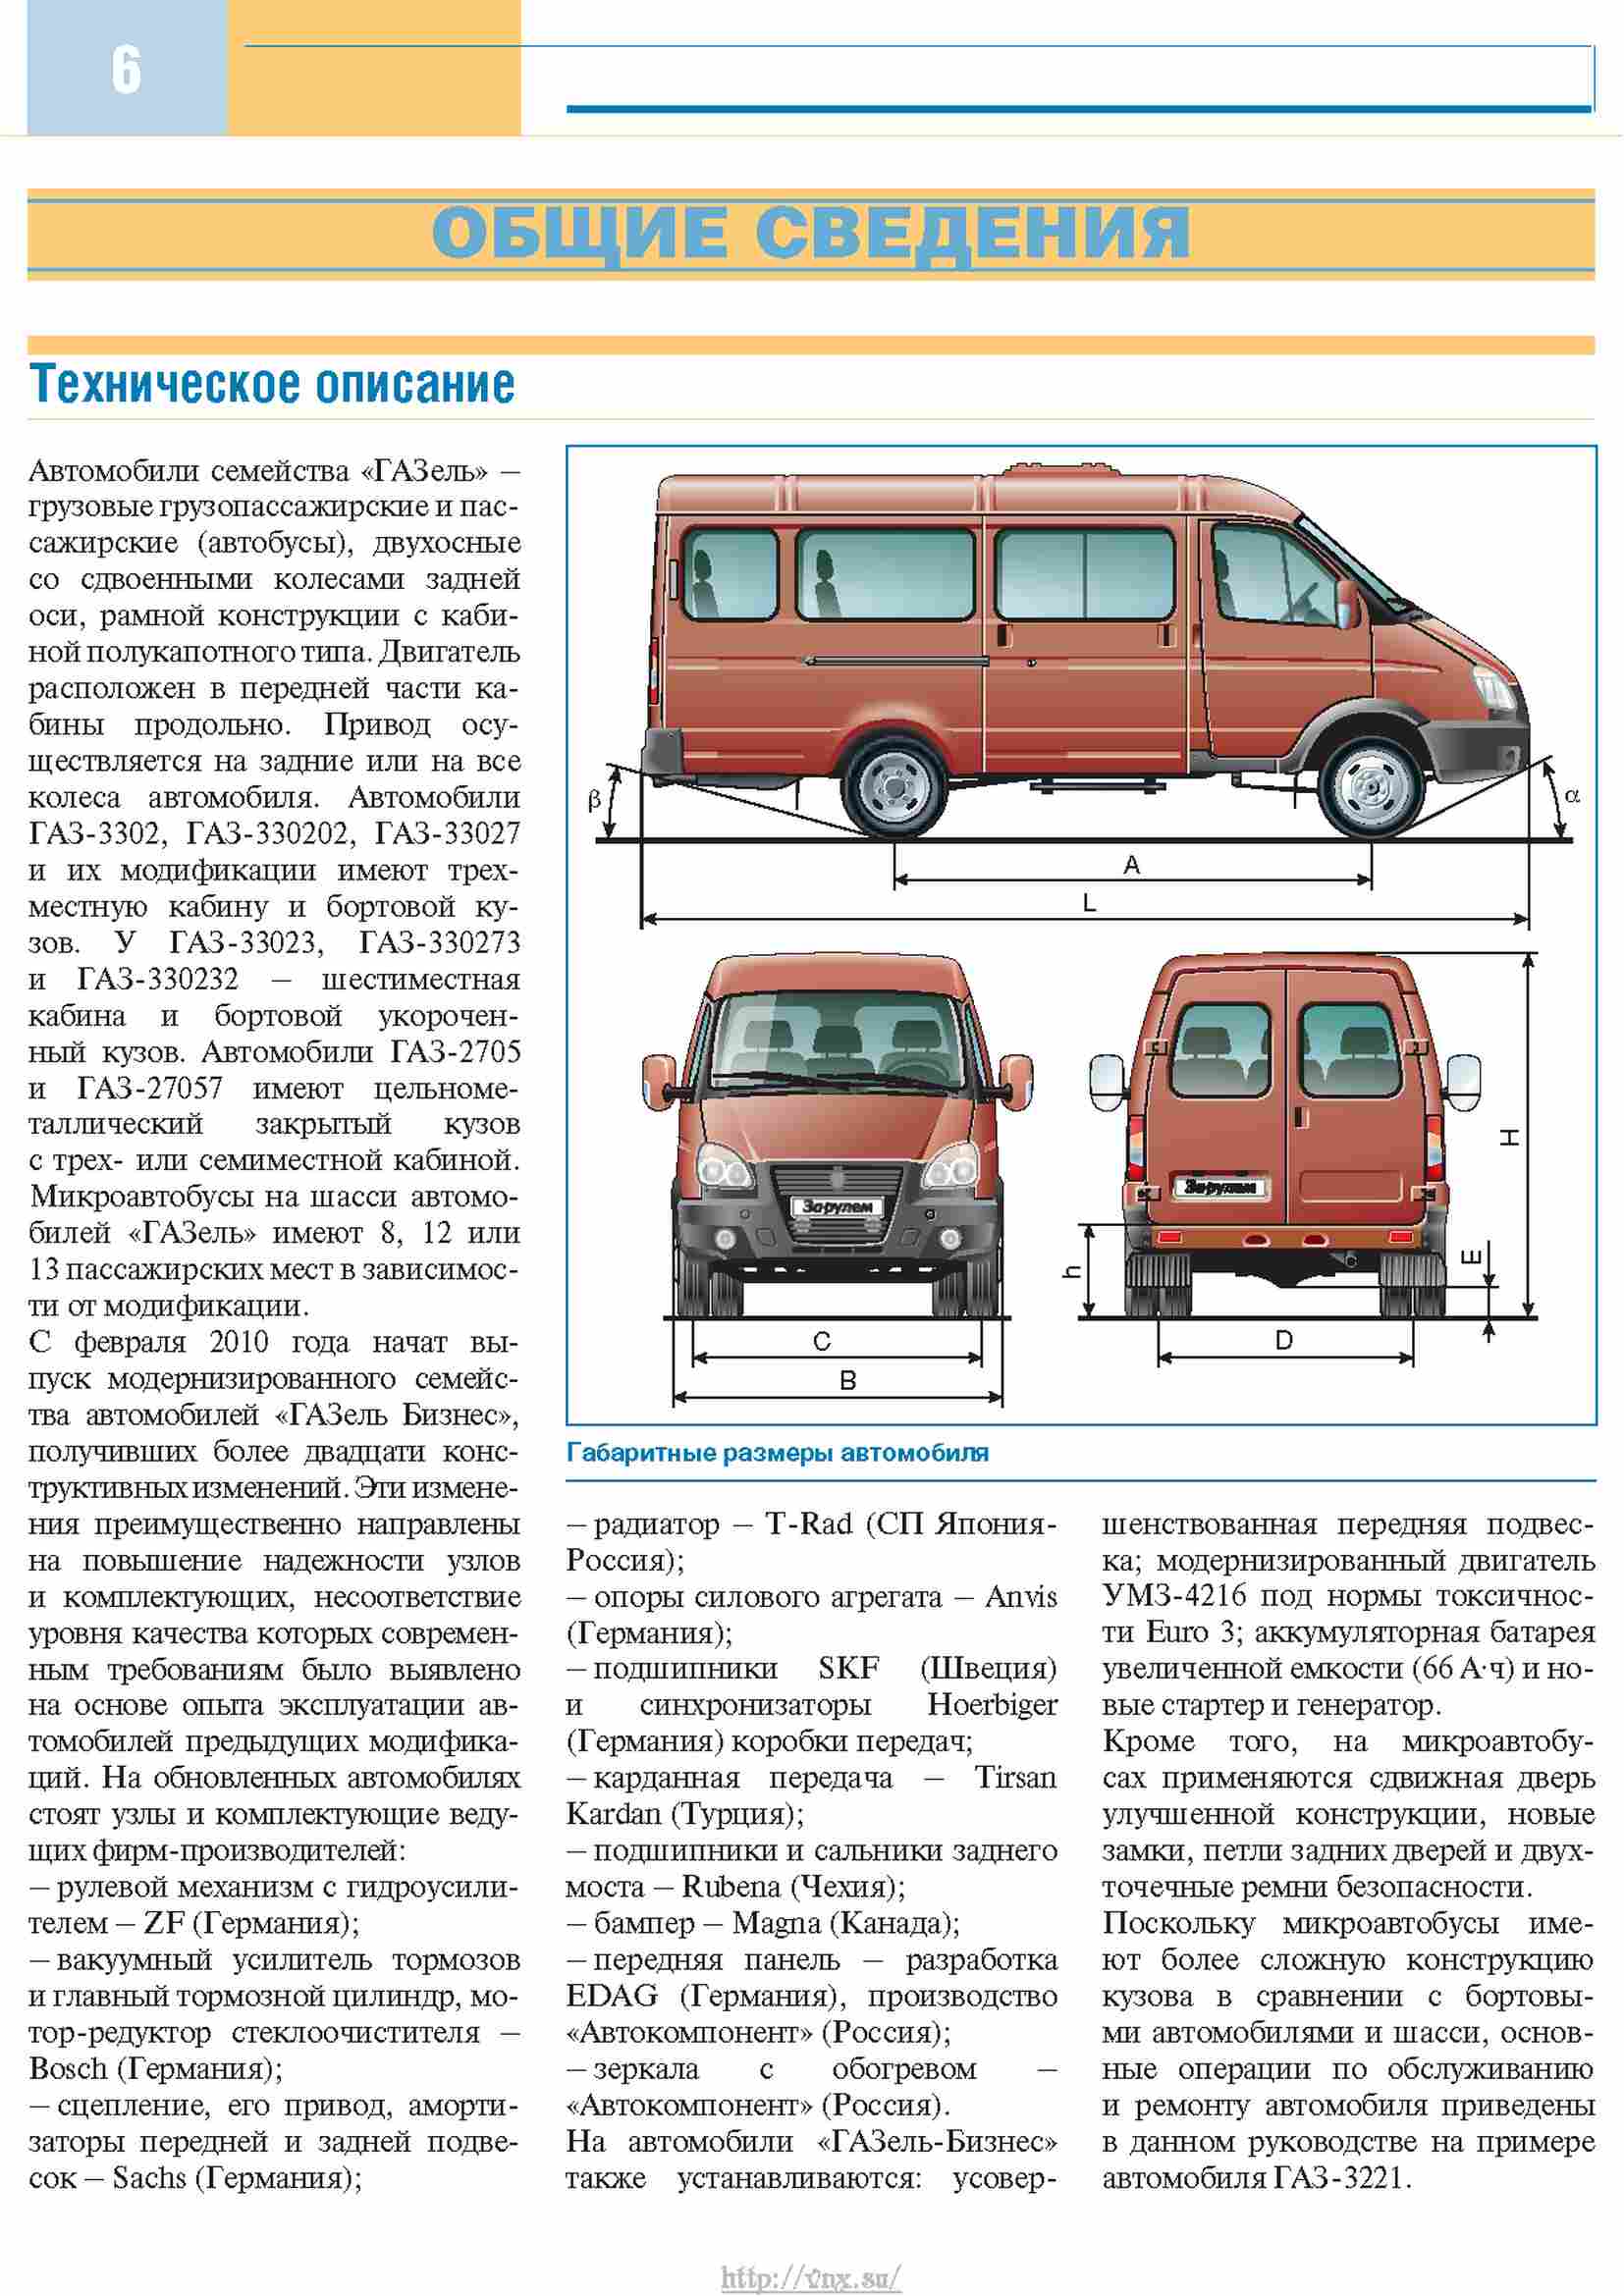 Маршрутное такси ГАЗ-3221: описание и технические характеристики